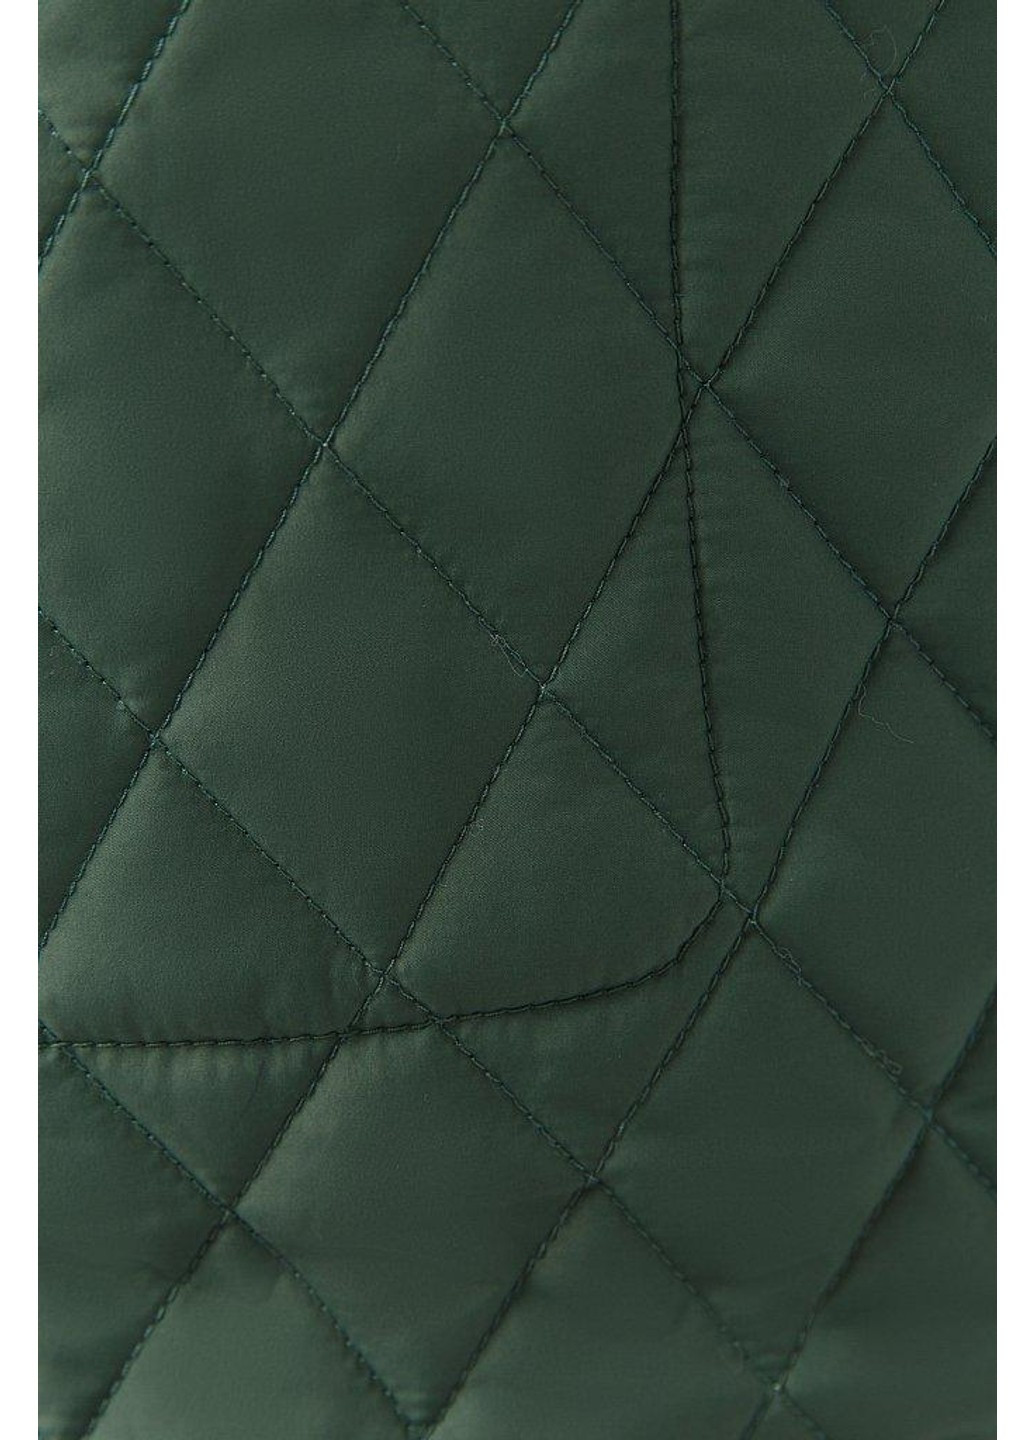 Зеленая демисезонная куртка a19-12097-514 Finn Flare